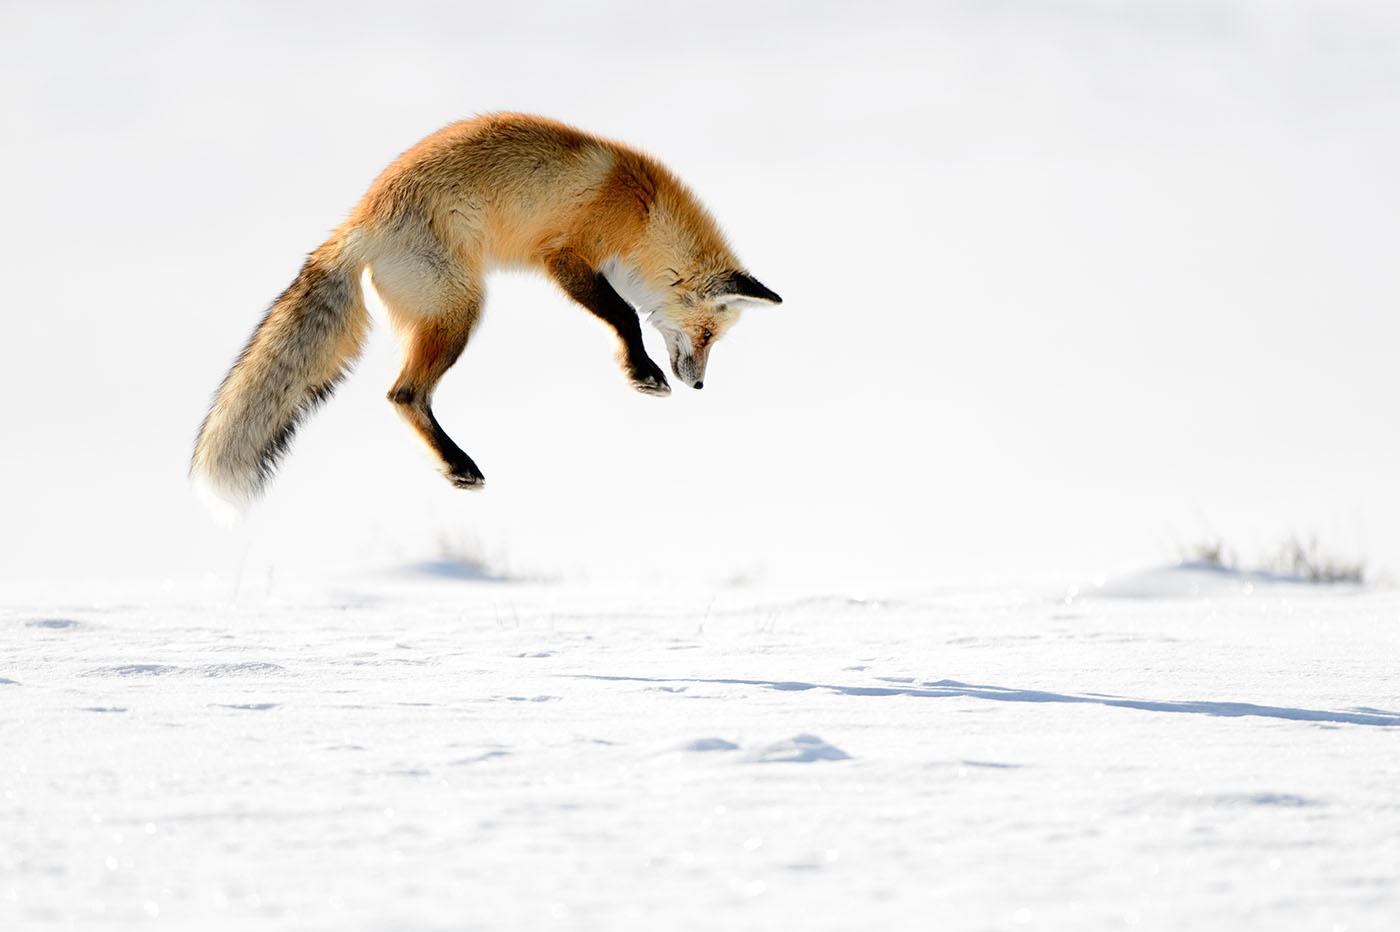 A red fox. Photo: NaturesMomentsuk / shutterstock.com